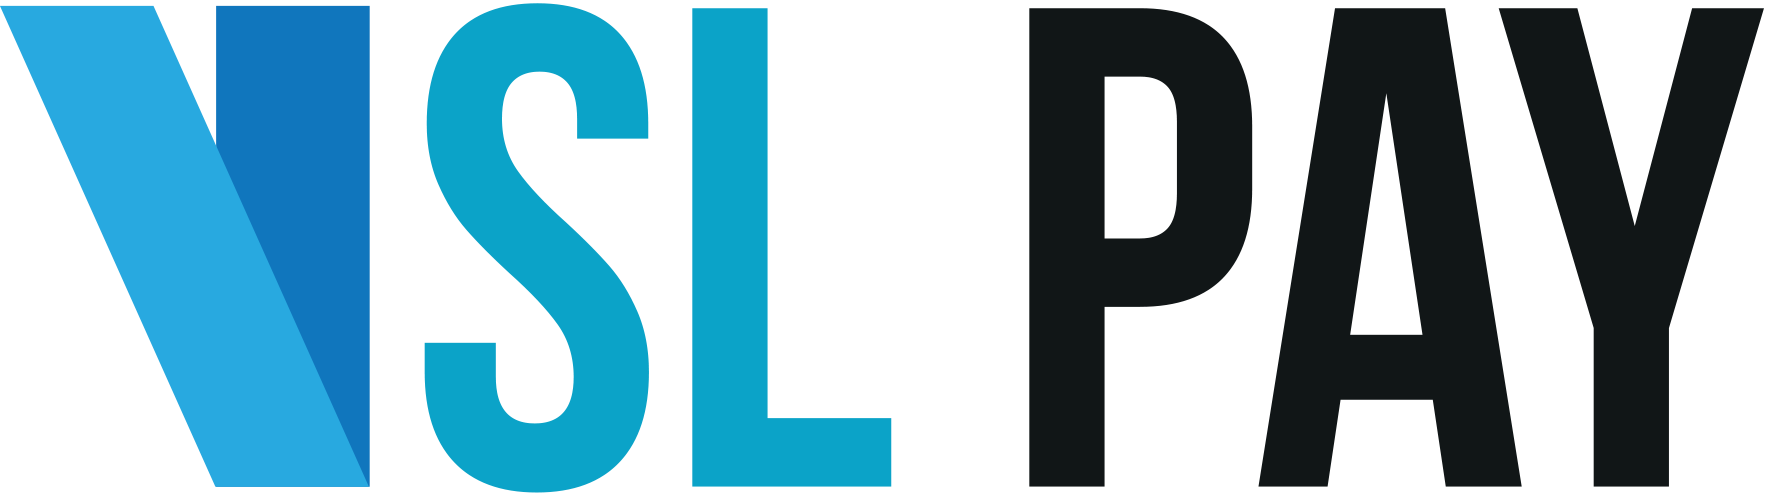 VSLPay Logo